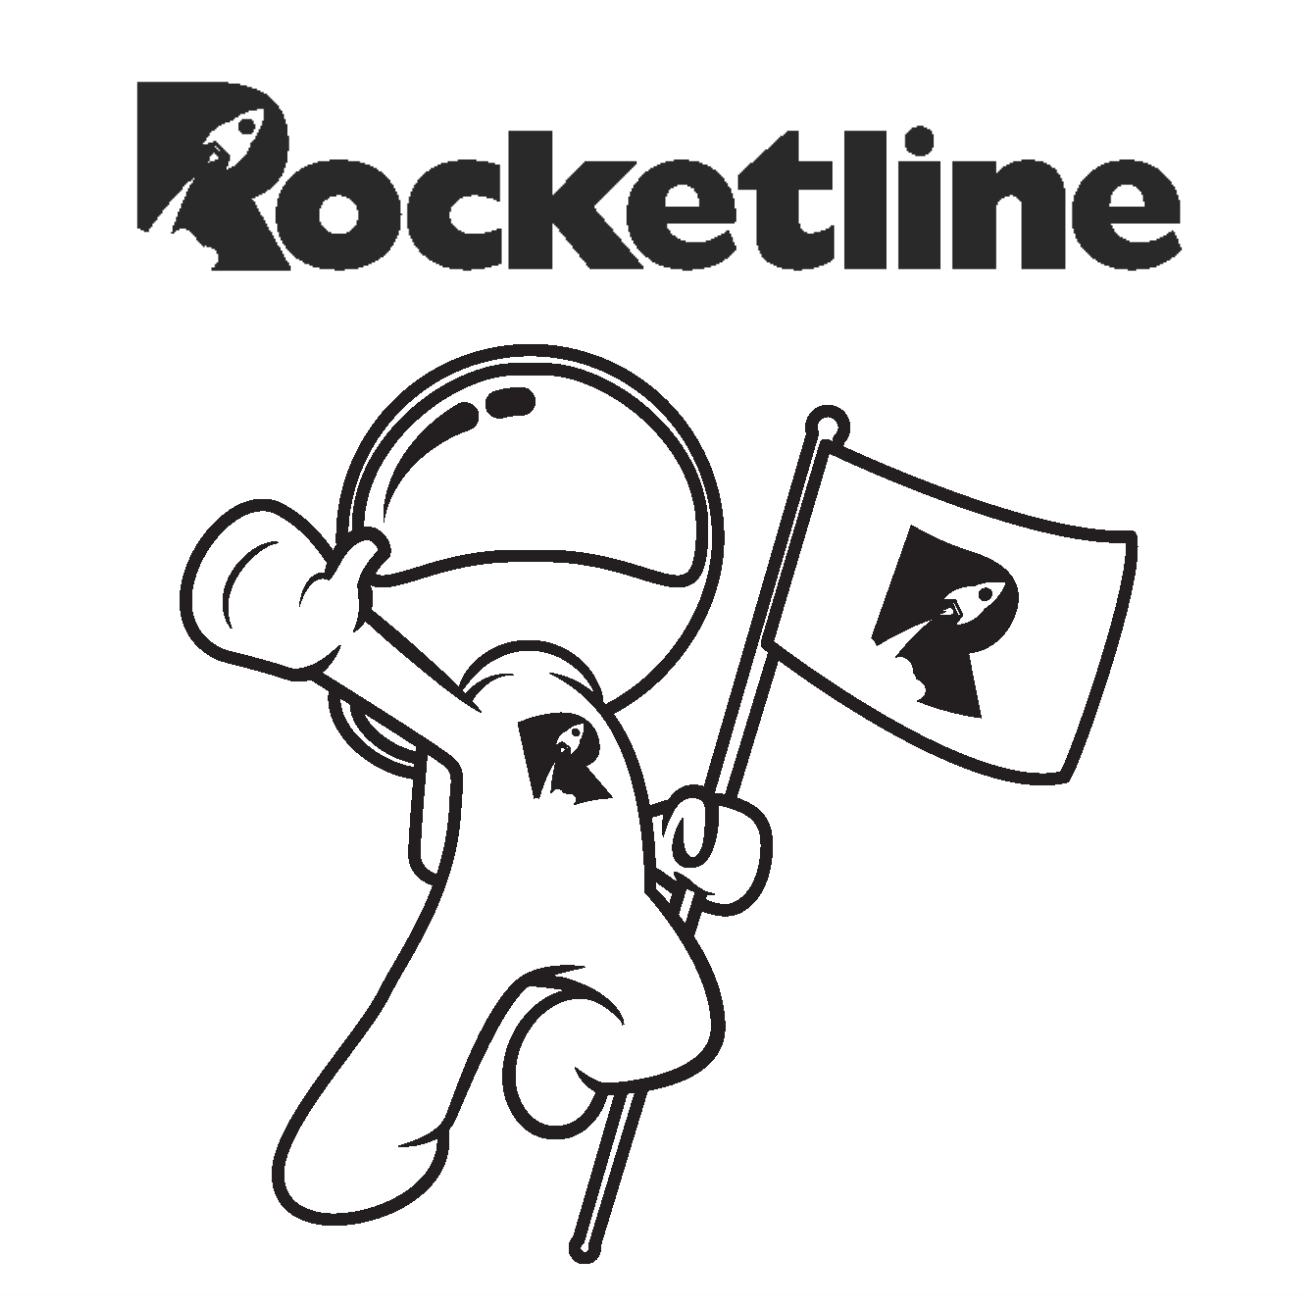 Rocket line astronaut